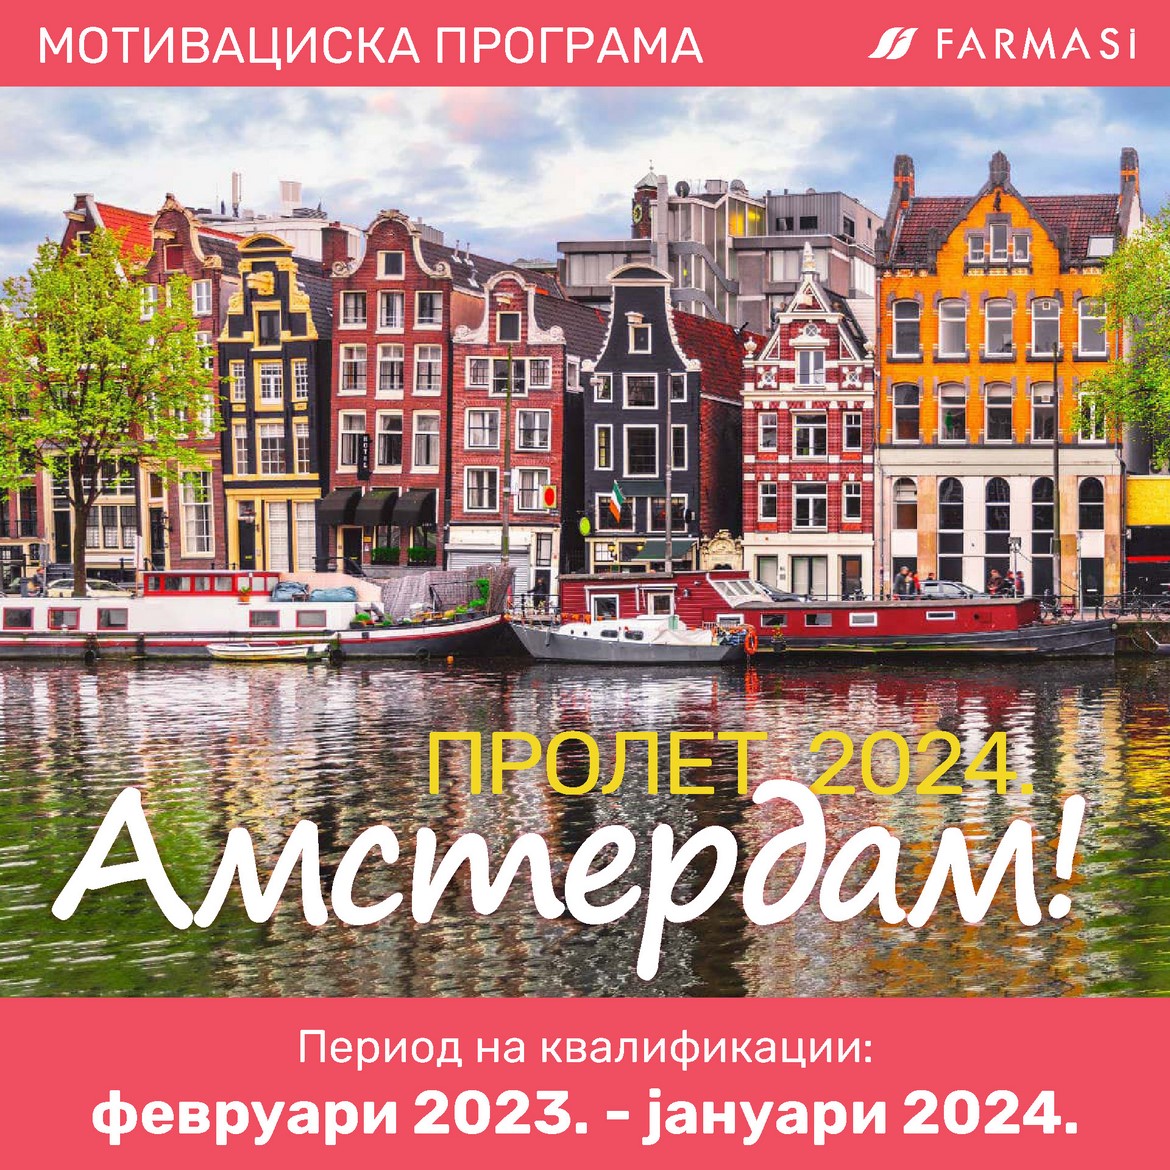 Spring 2024. in Amsterdam!